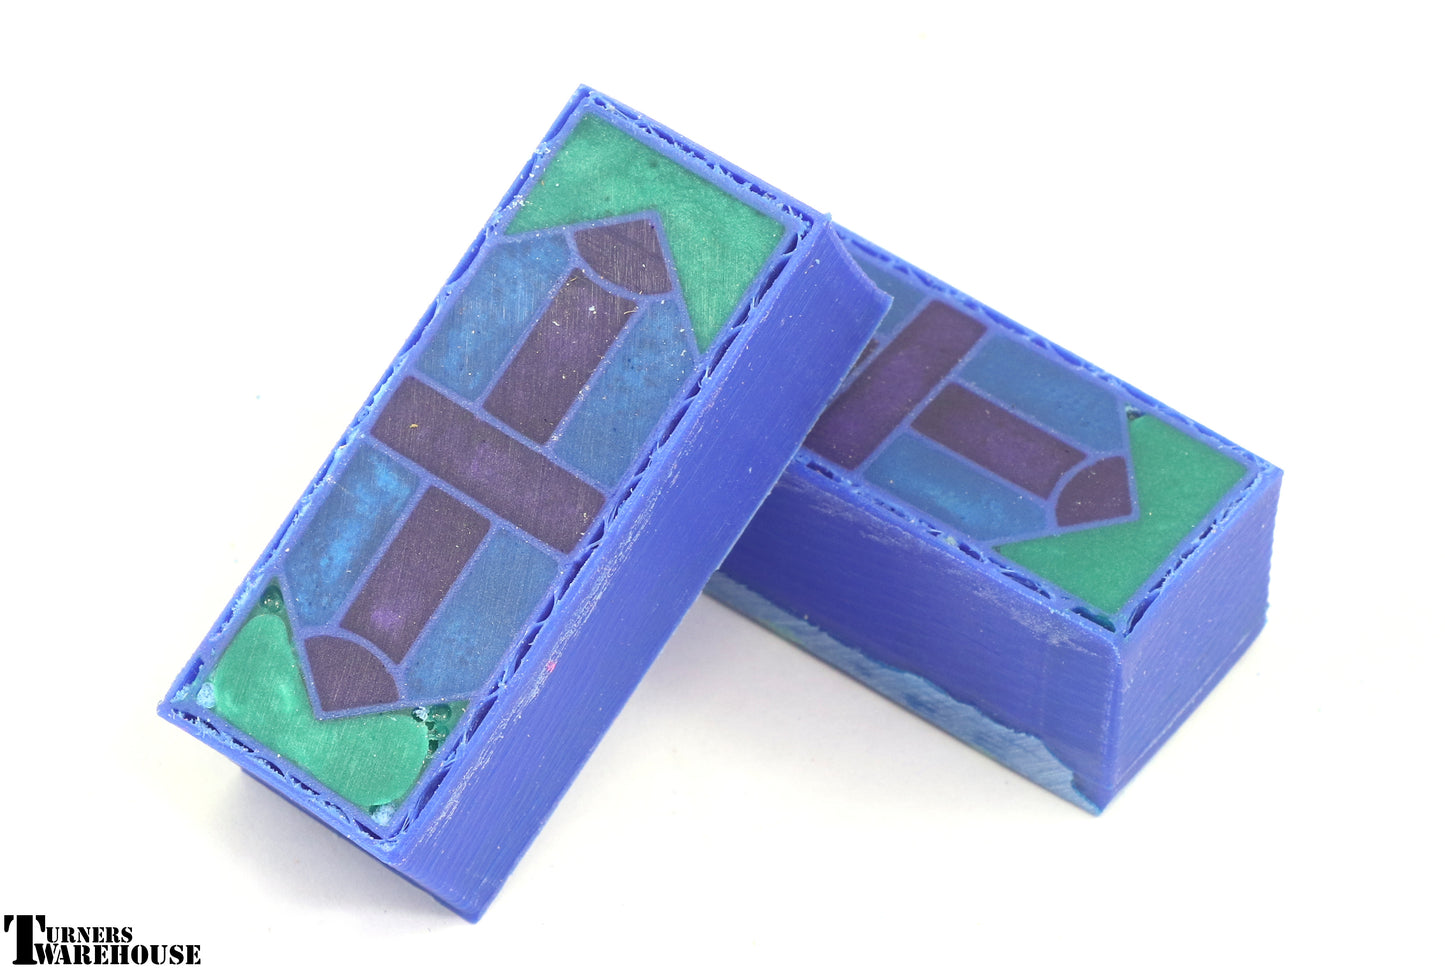 3D Printed or Honeycomb Pen Blanks